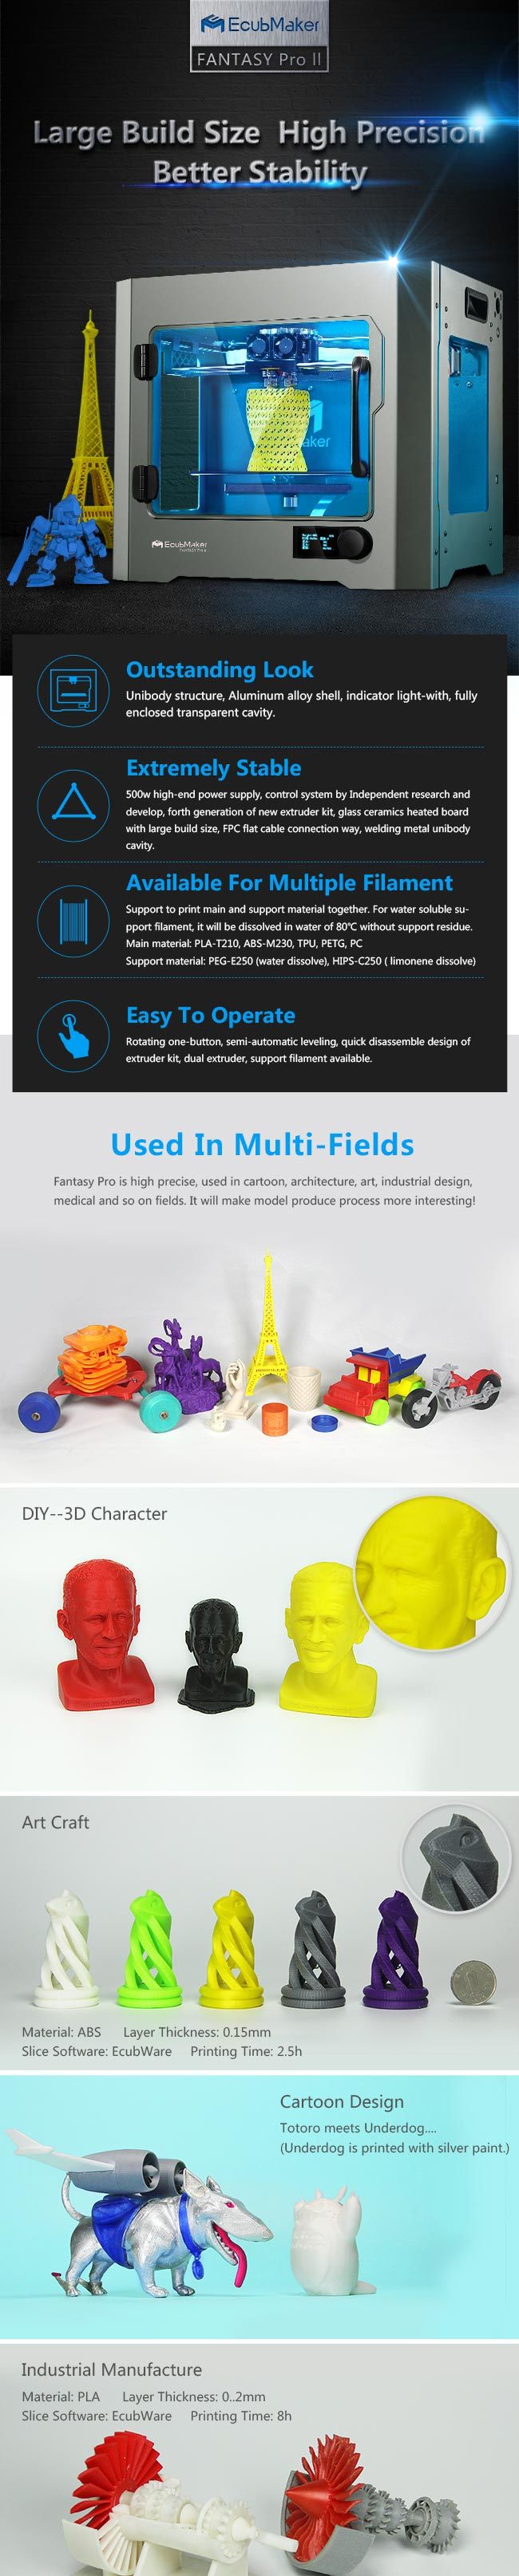 New Item Professional 3D Printer for Printing